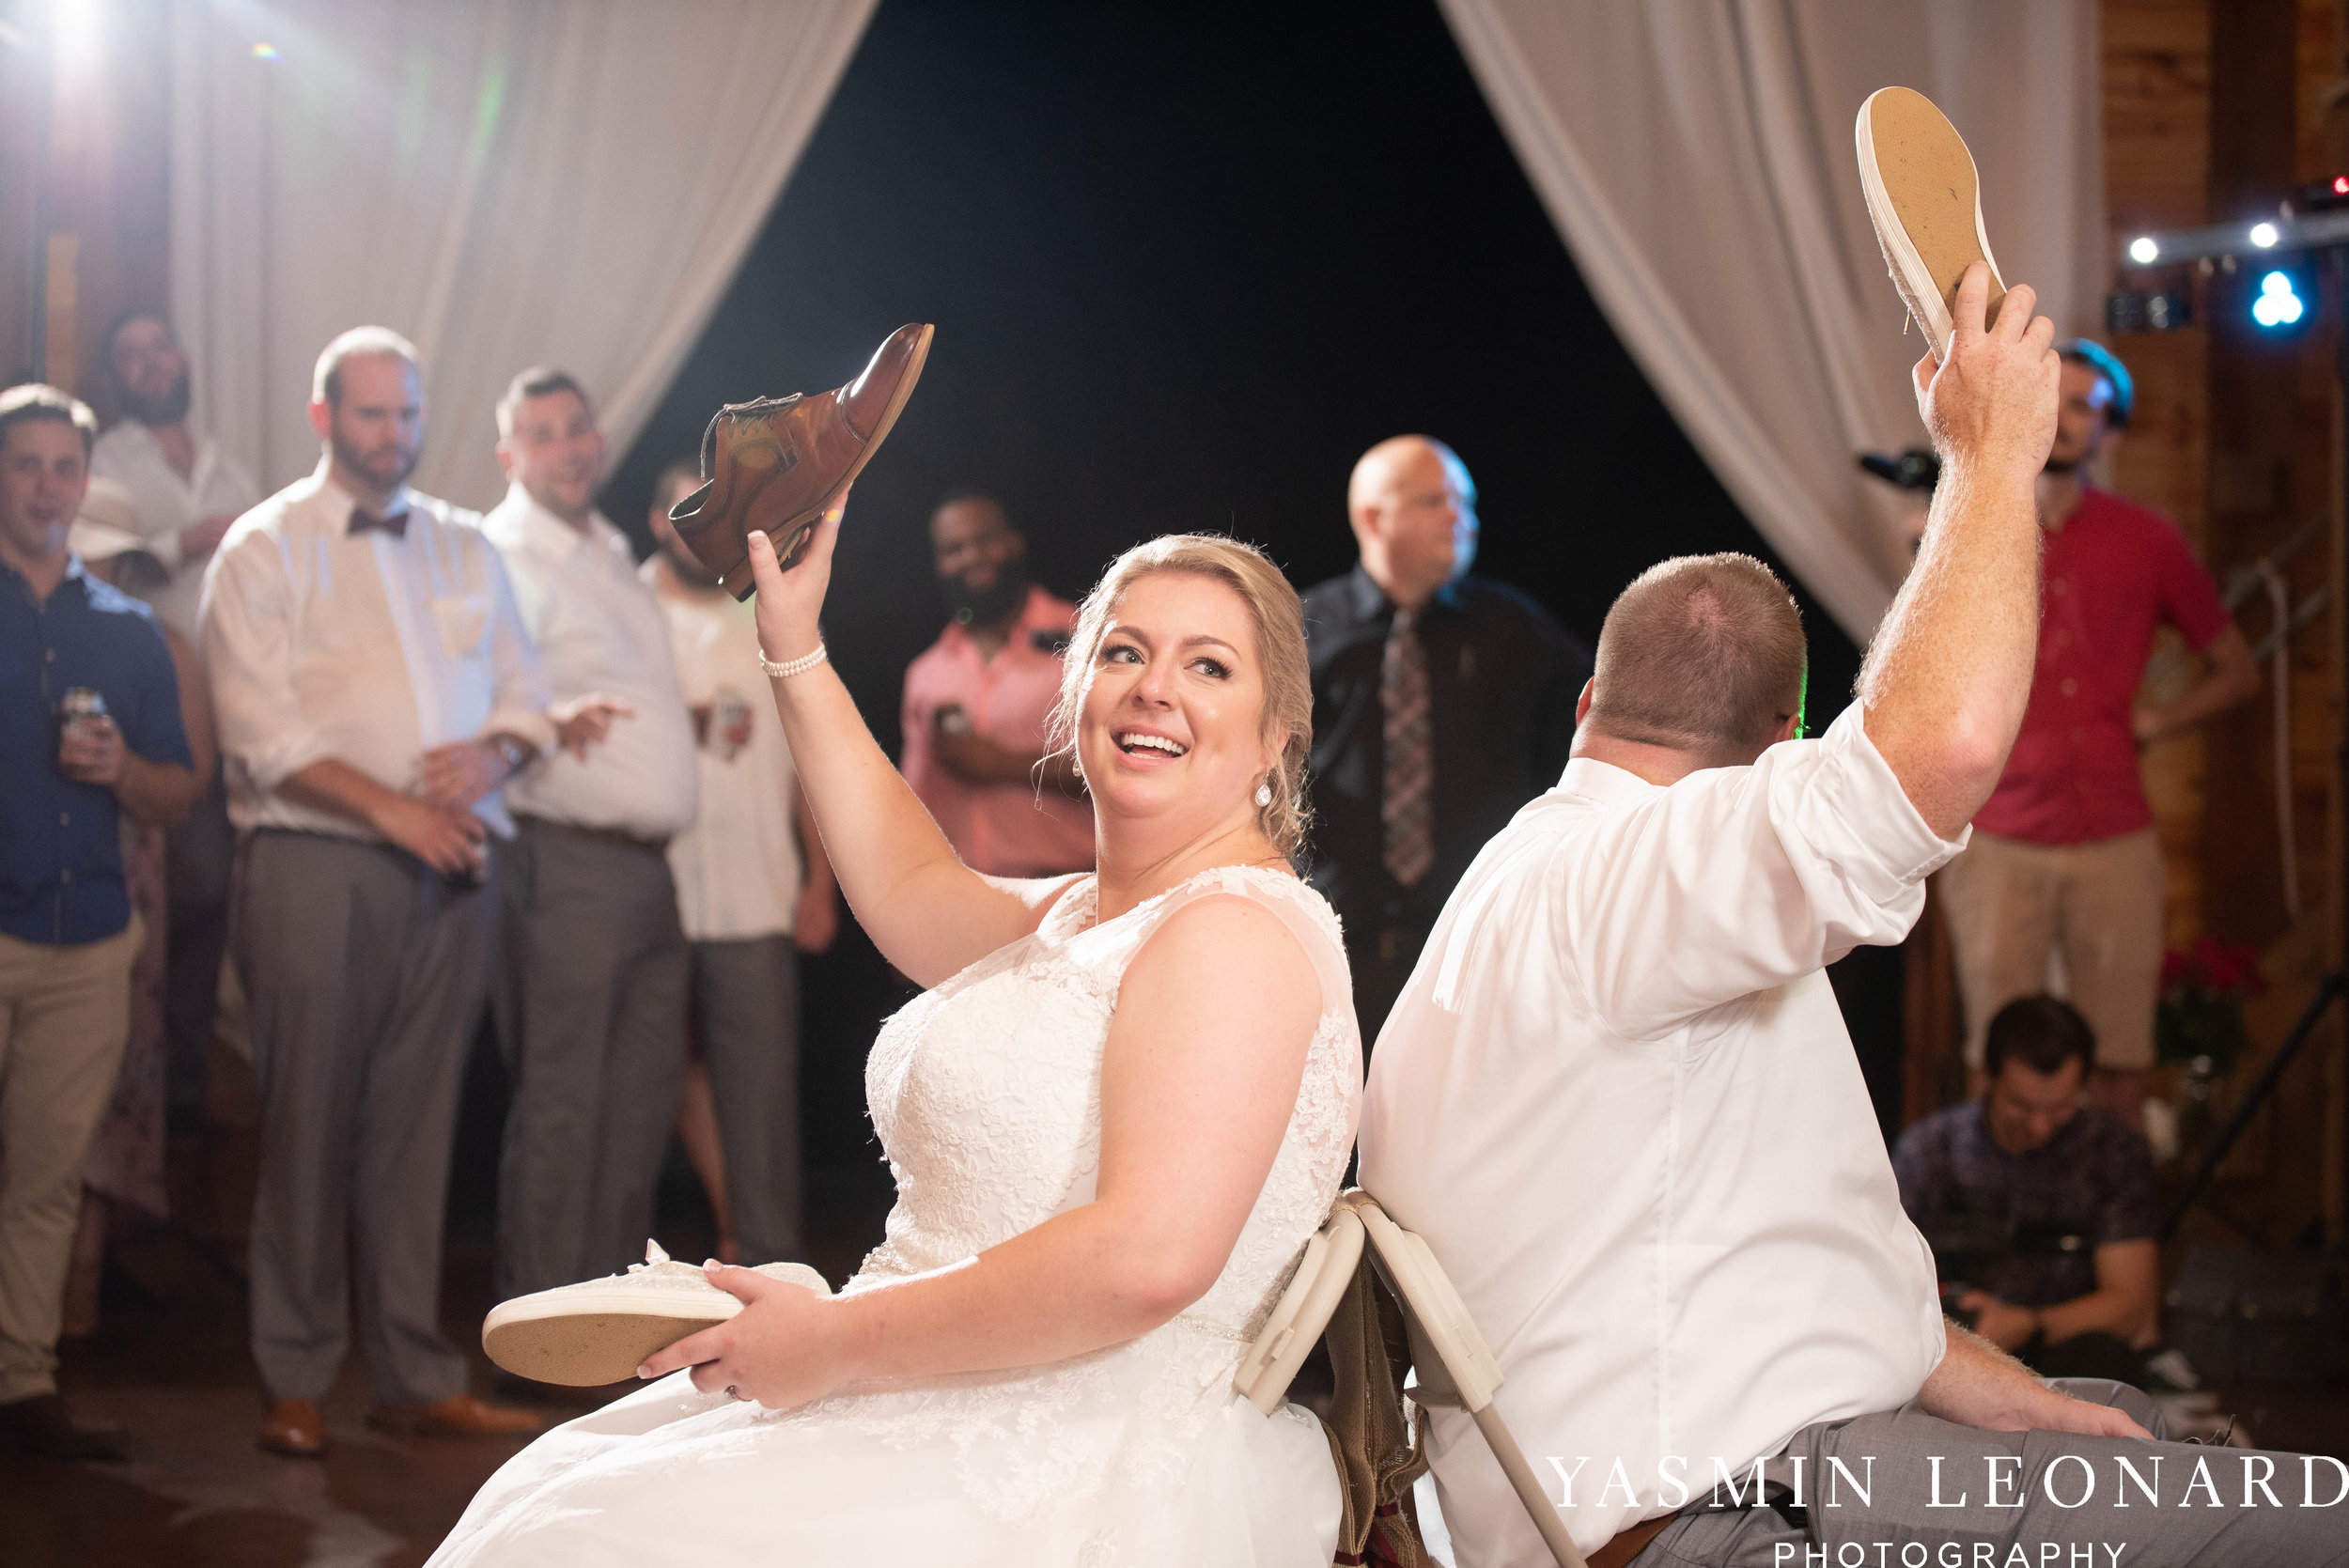 Danner Farms - NC Wedding Venues - NC Barns - Statesville NC - NC Wedding Photographer - High Point Wedding Photographer - Yasmin Leonard Photography-92.jpg